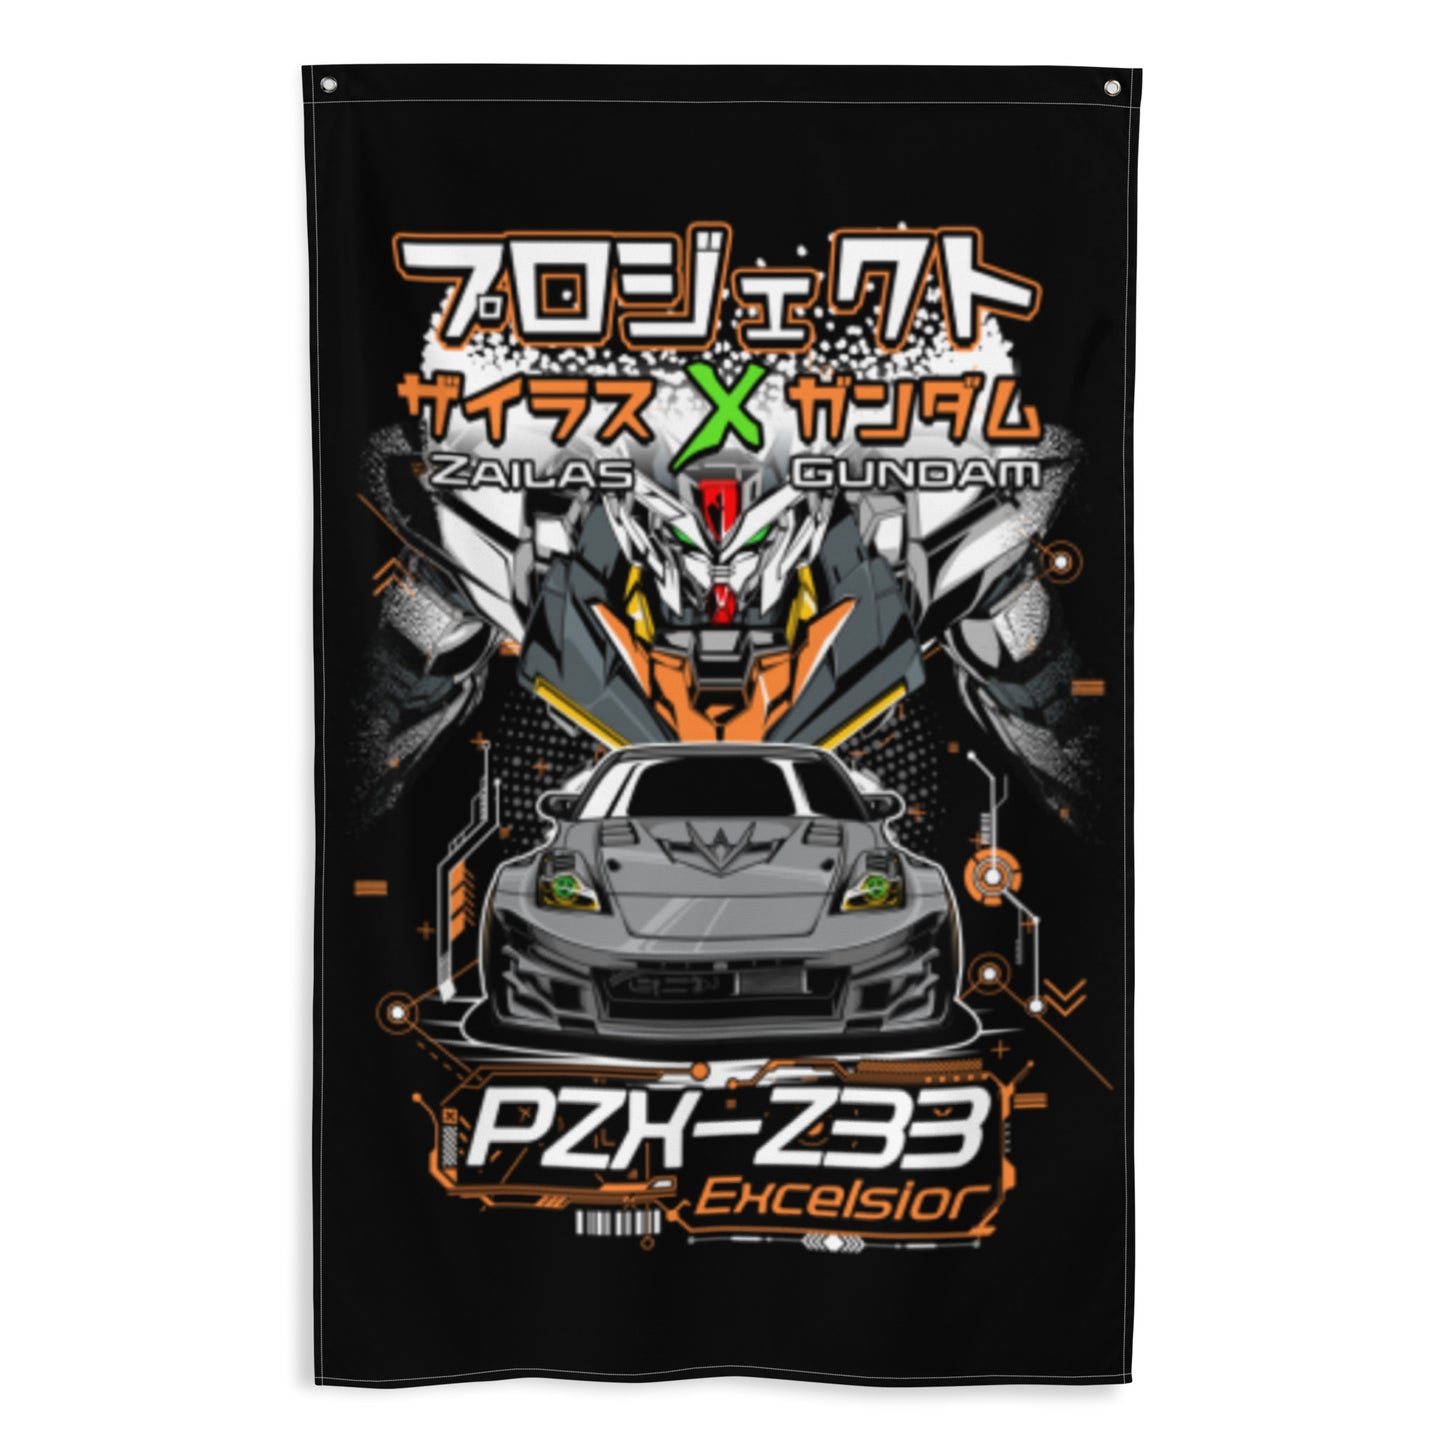 Project Zailas Excelsior: Zailas X Gundam Flag